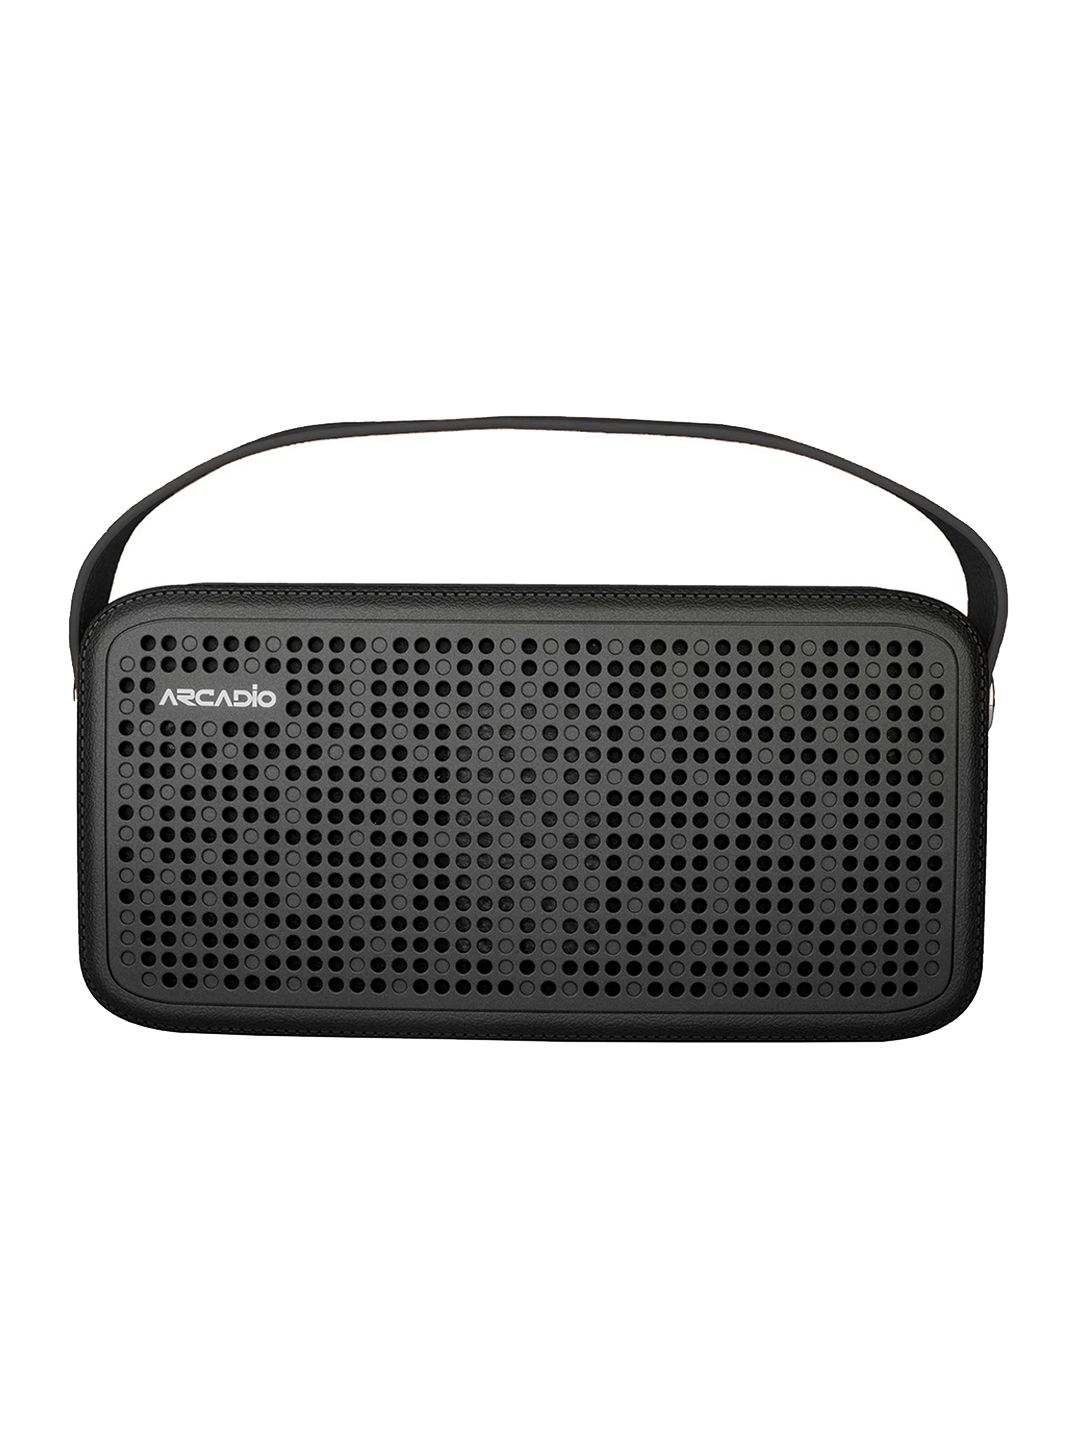 ARCADIO Black Solid Portable Bluetooth Thunder Speakers Price in India